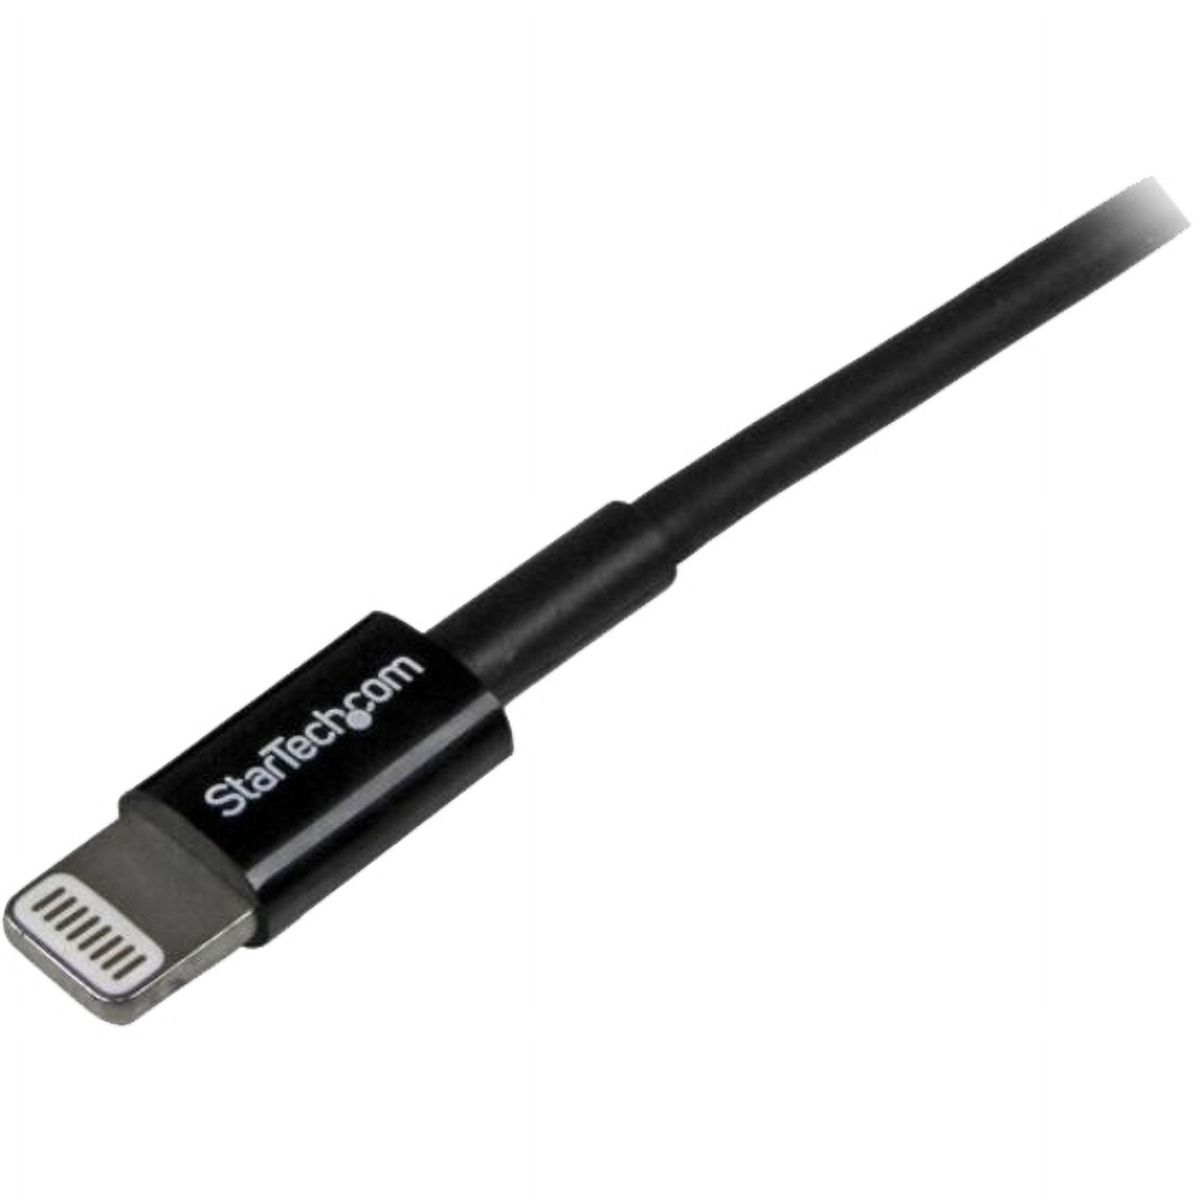 Startech USBLT1MBS USB to Lightning Cable Apple MFi Certified Slim 1 m (3 ft.) Black - image 3 of 4